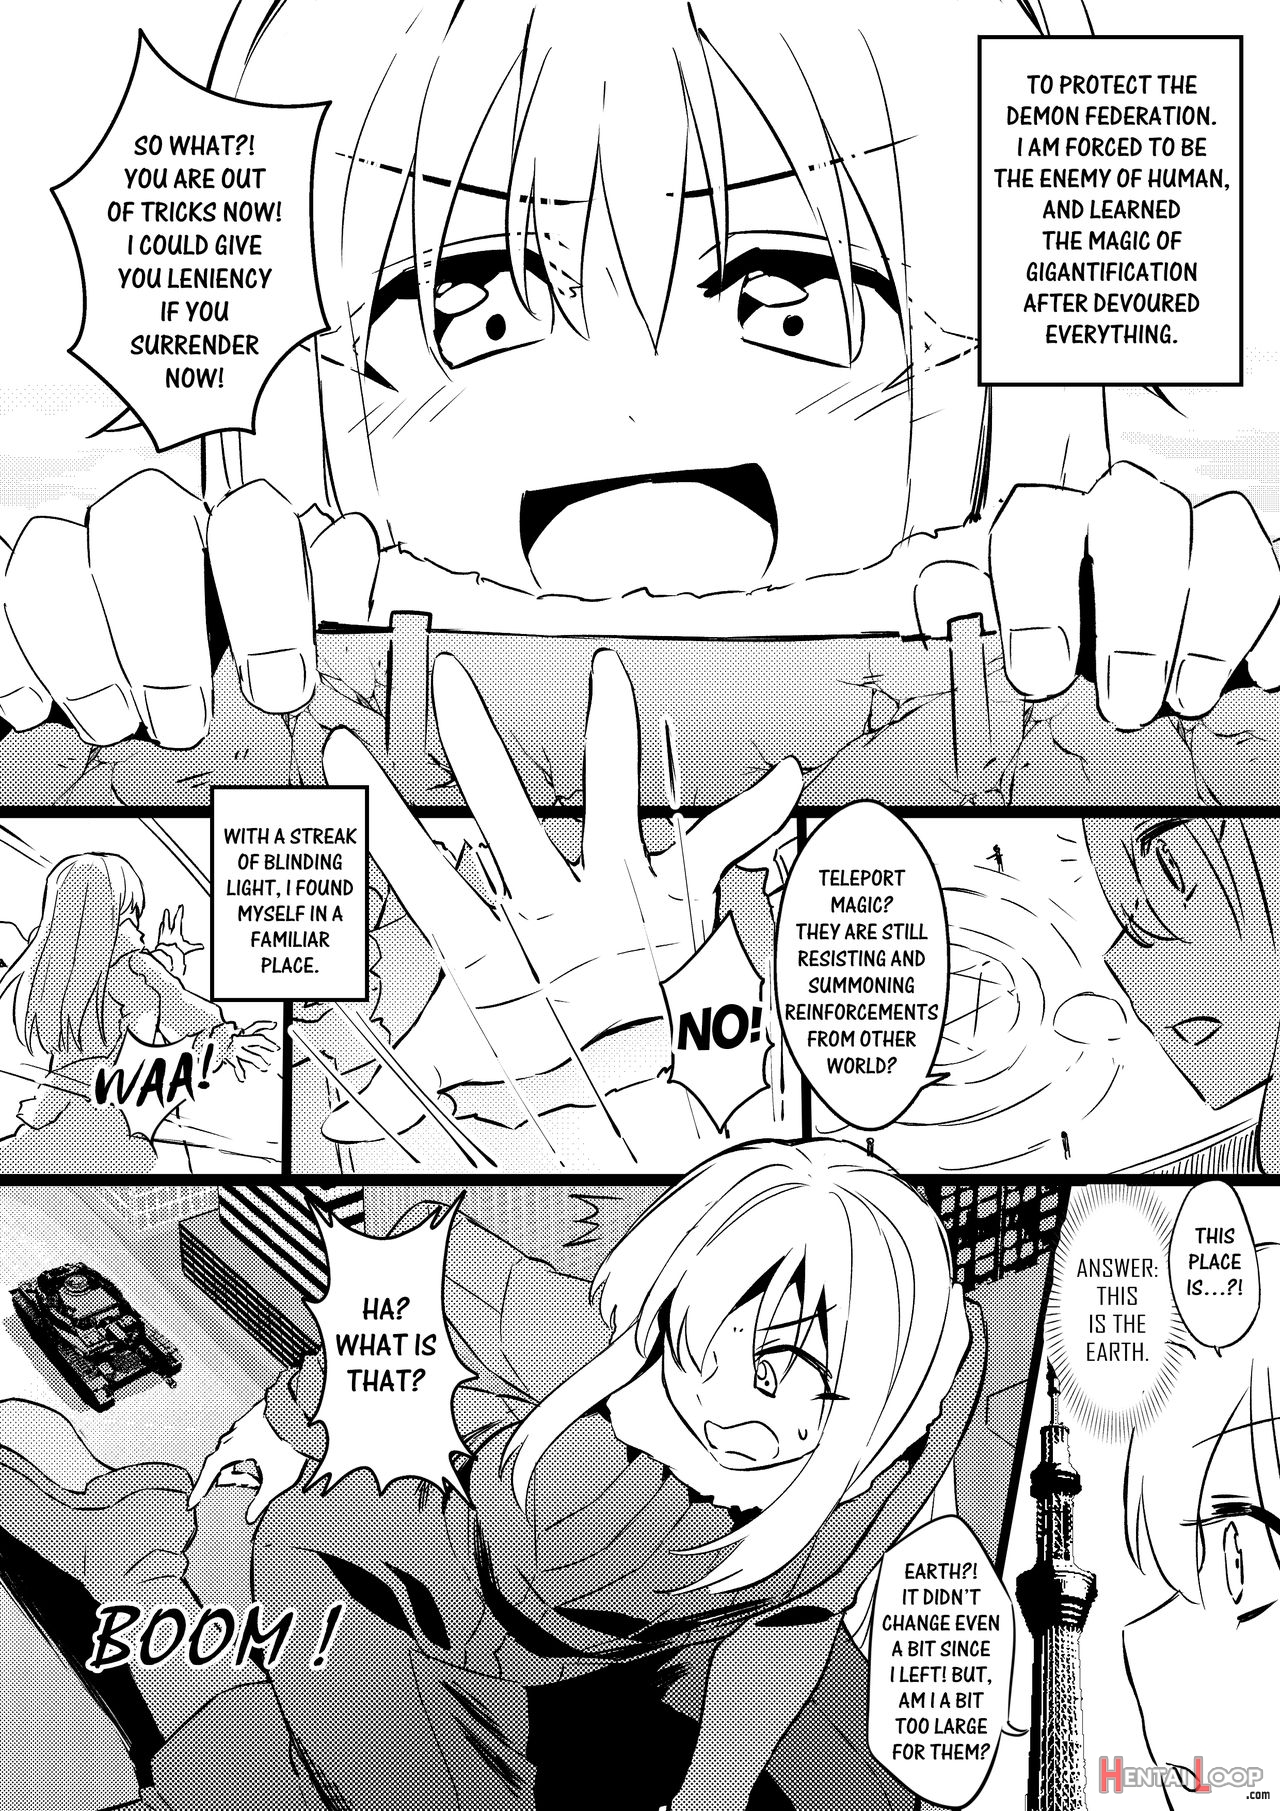 Demon Lord Rimuru page 3